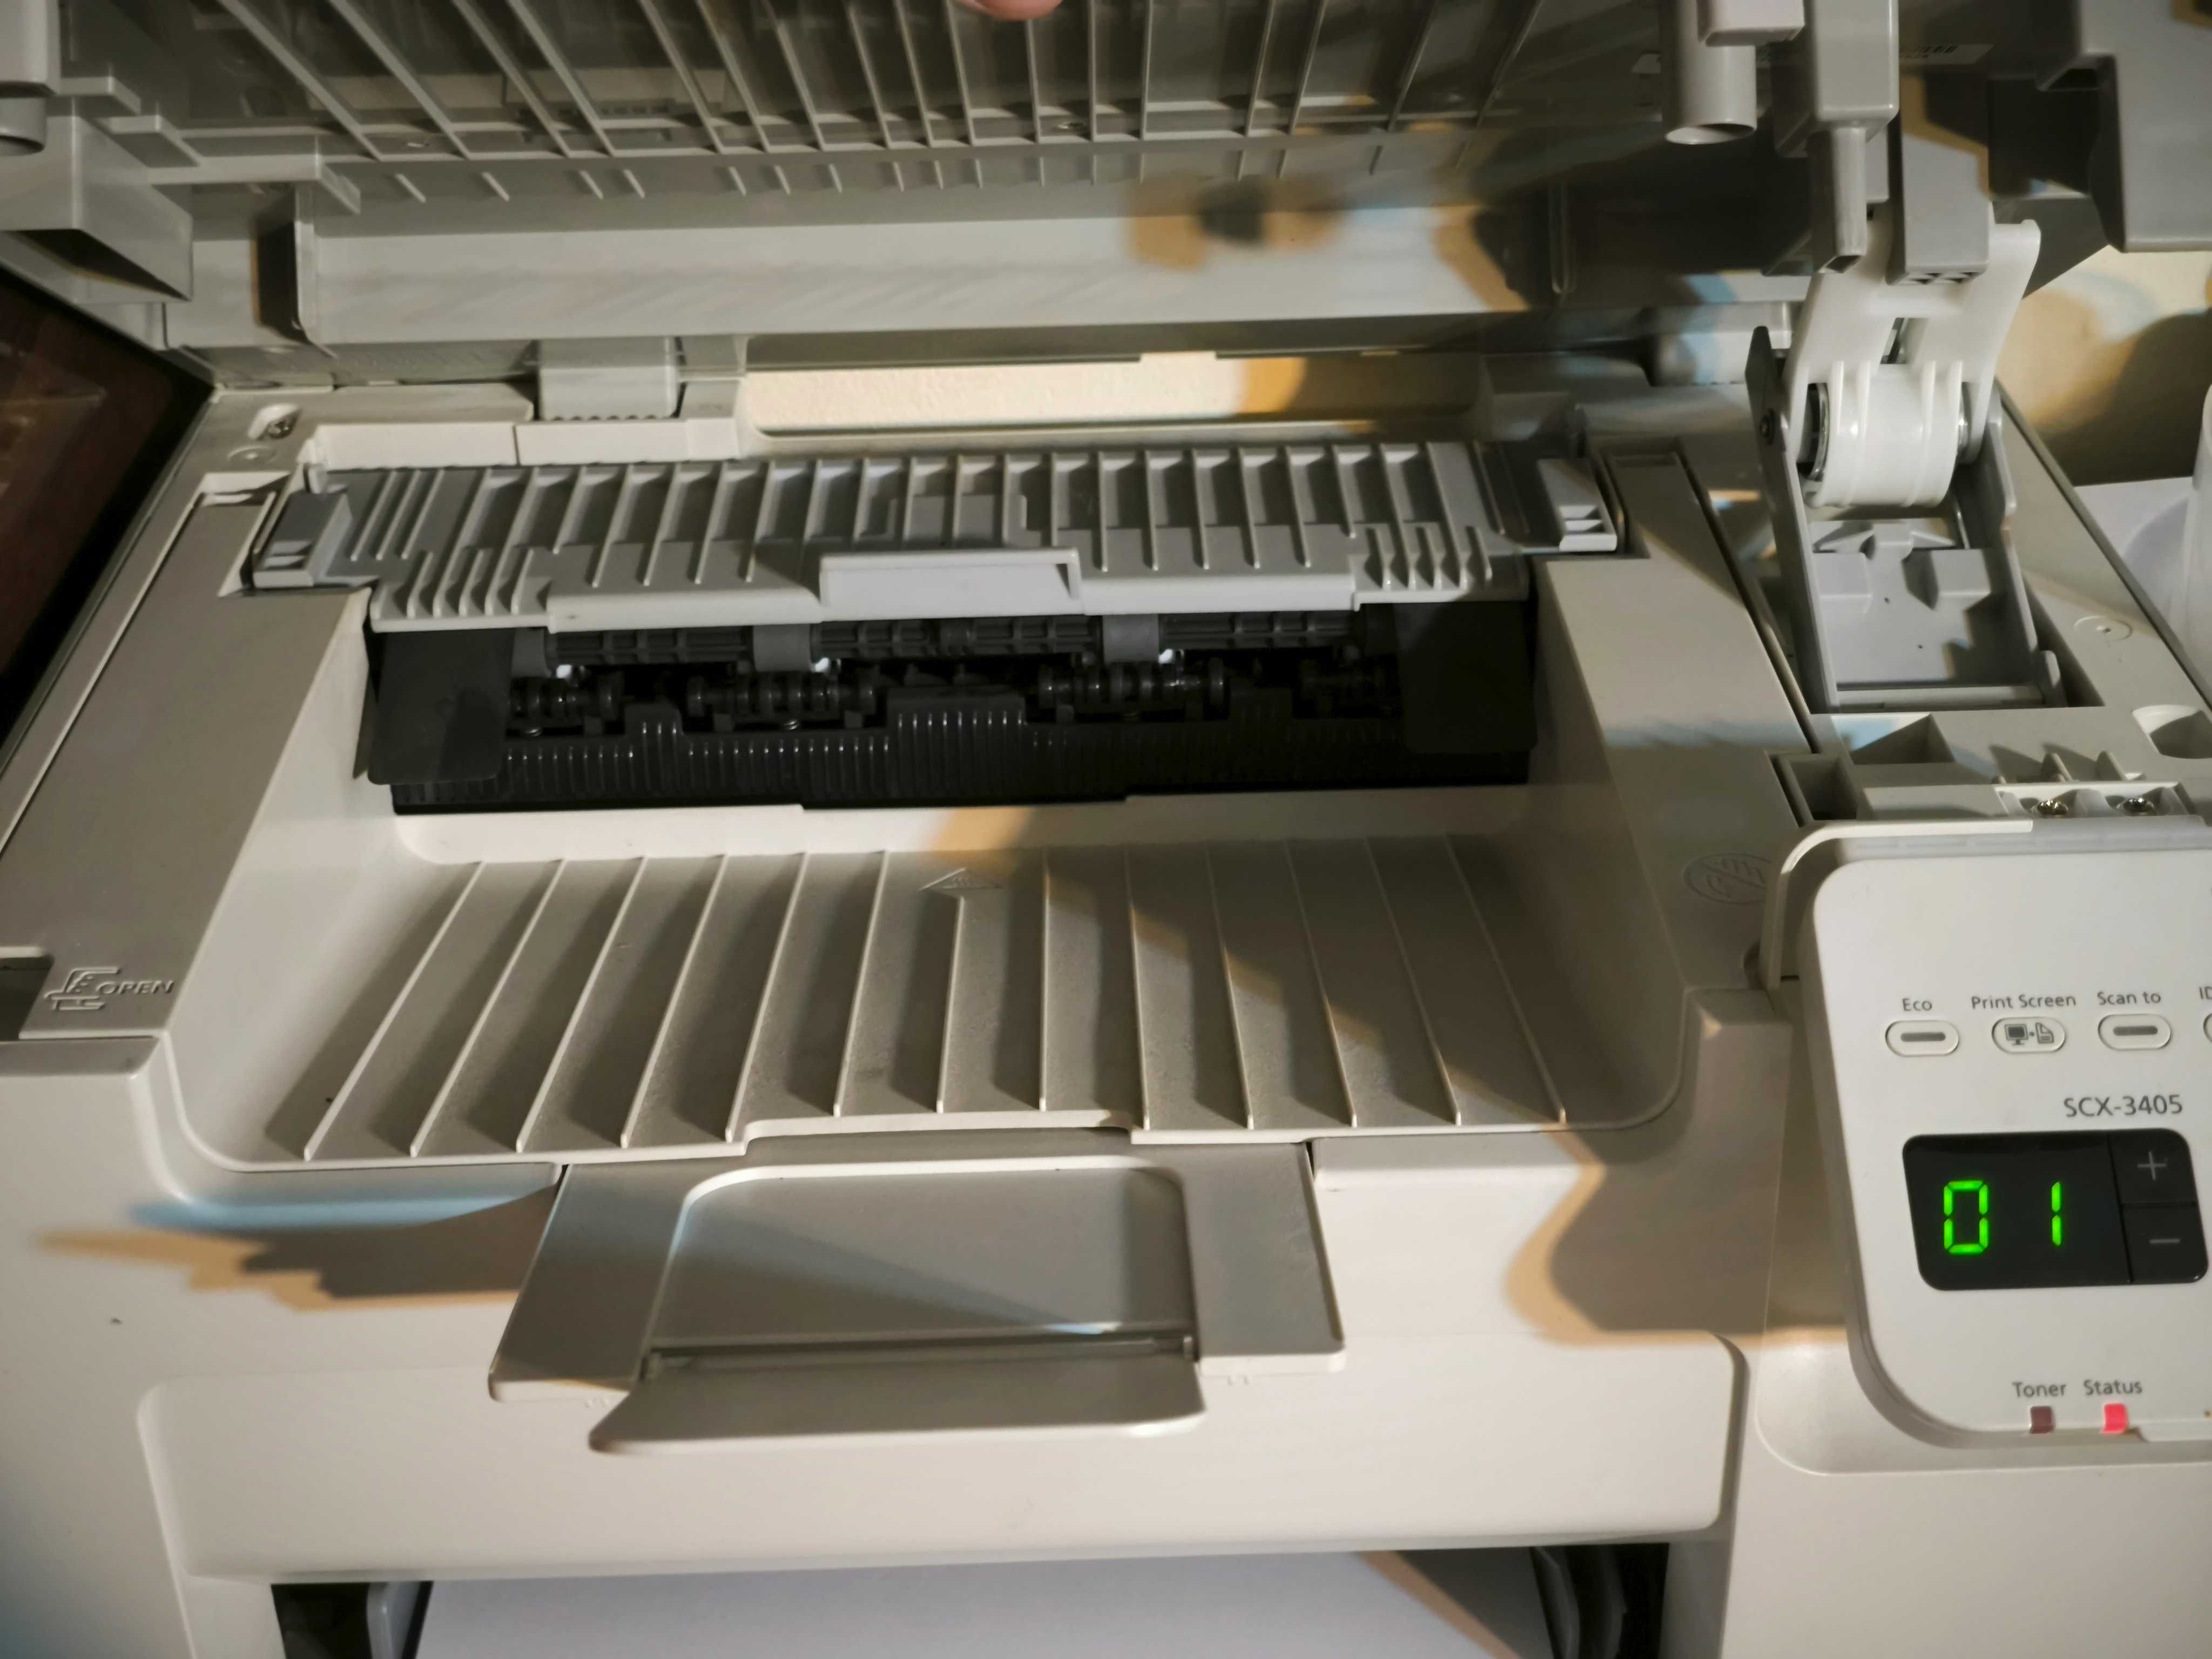 Imprimanta Multifunctionala Laser alb negru Samsung SCX 3405